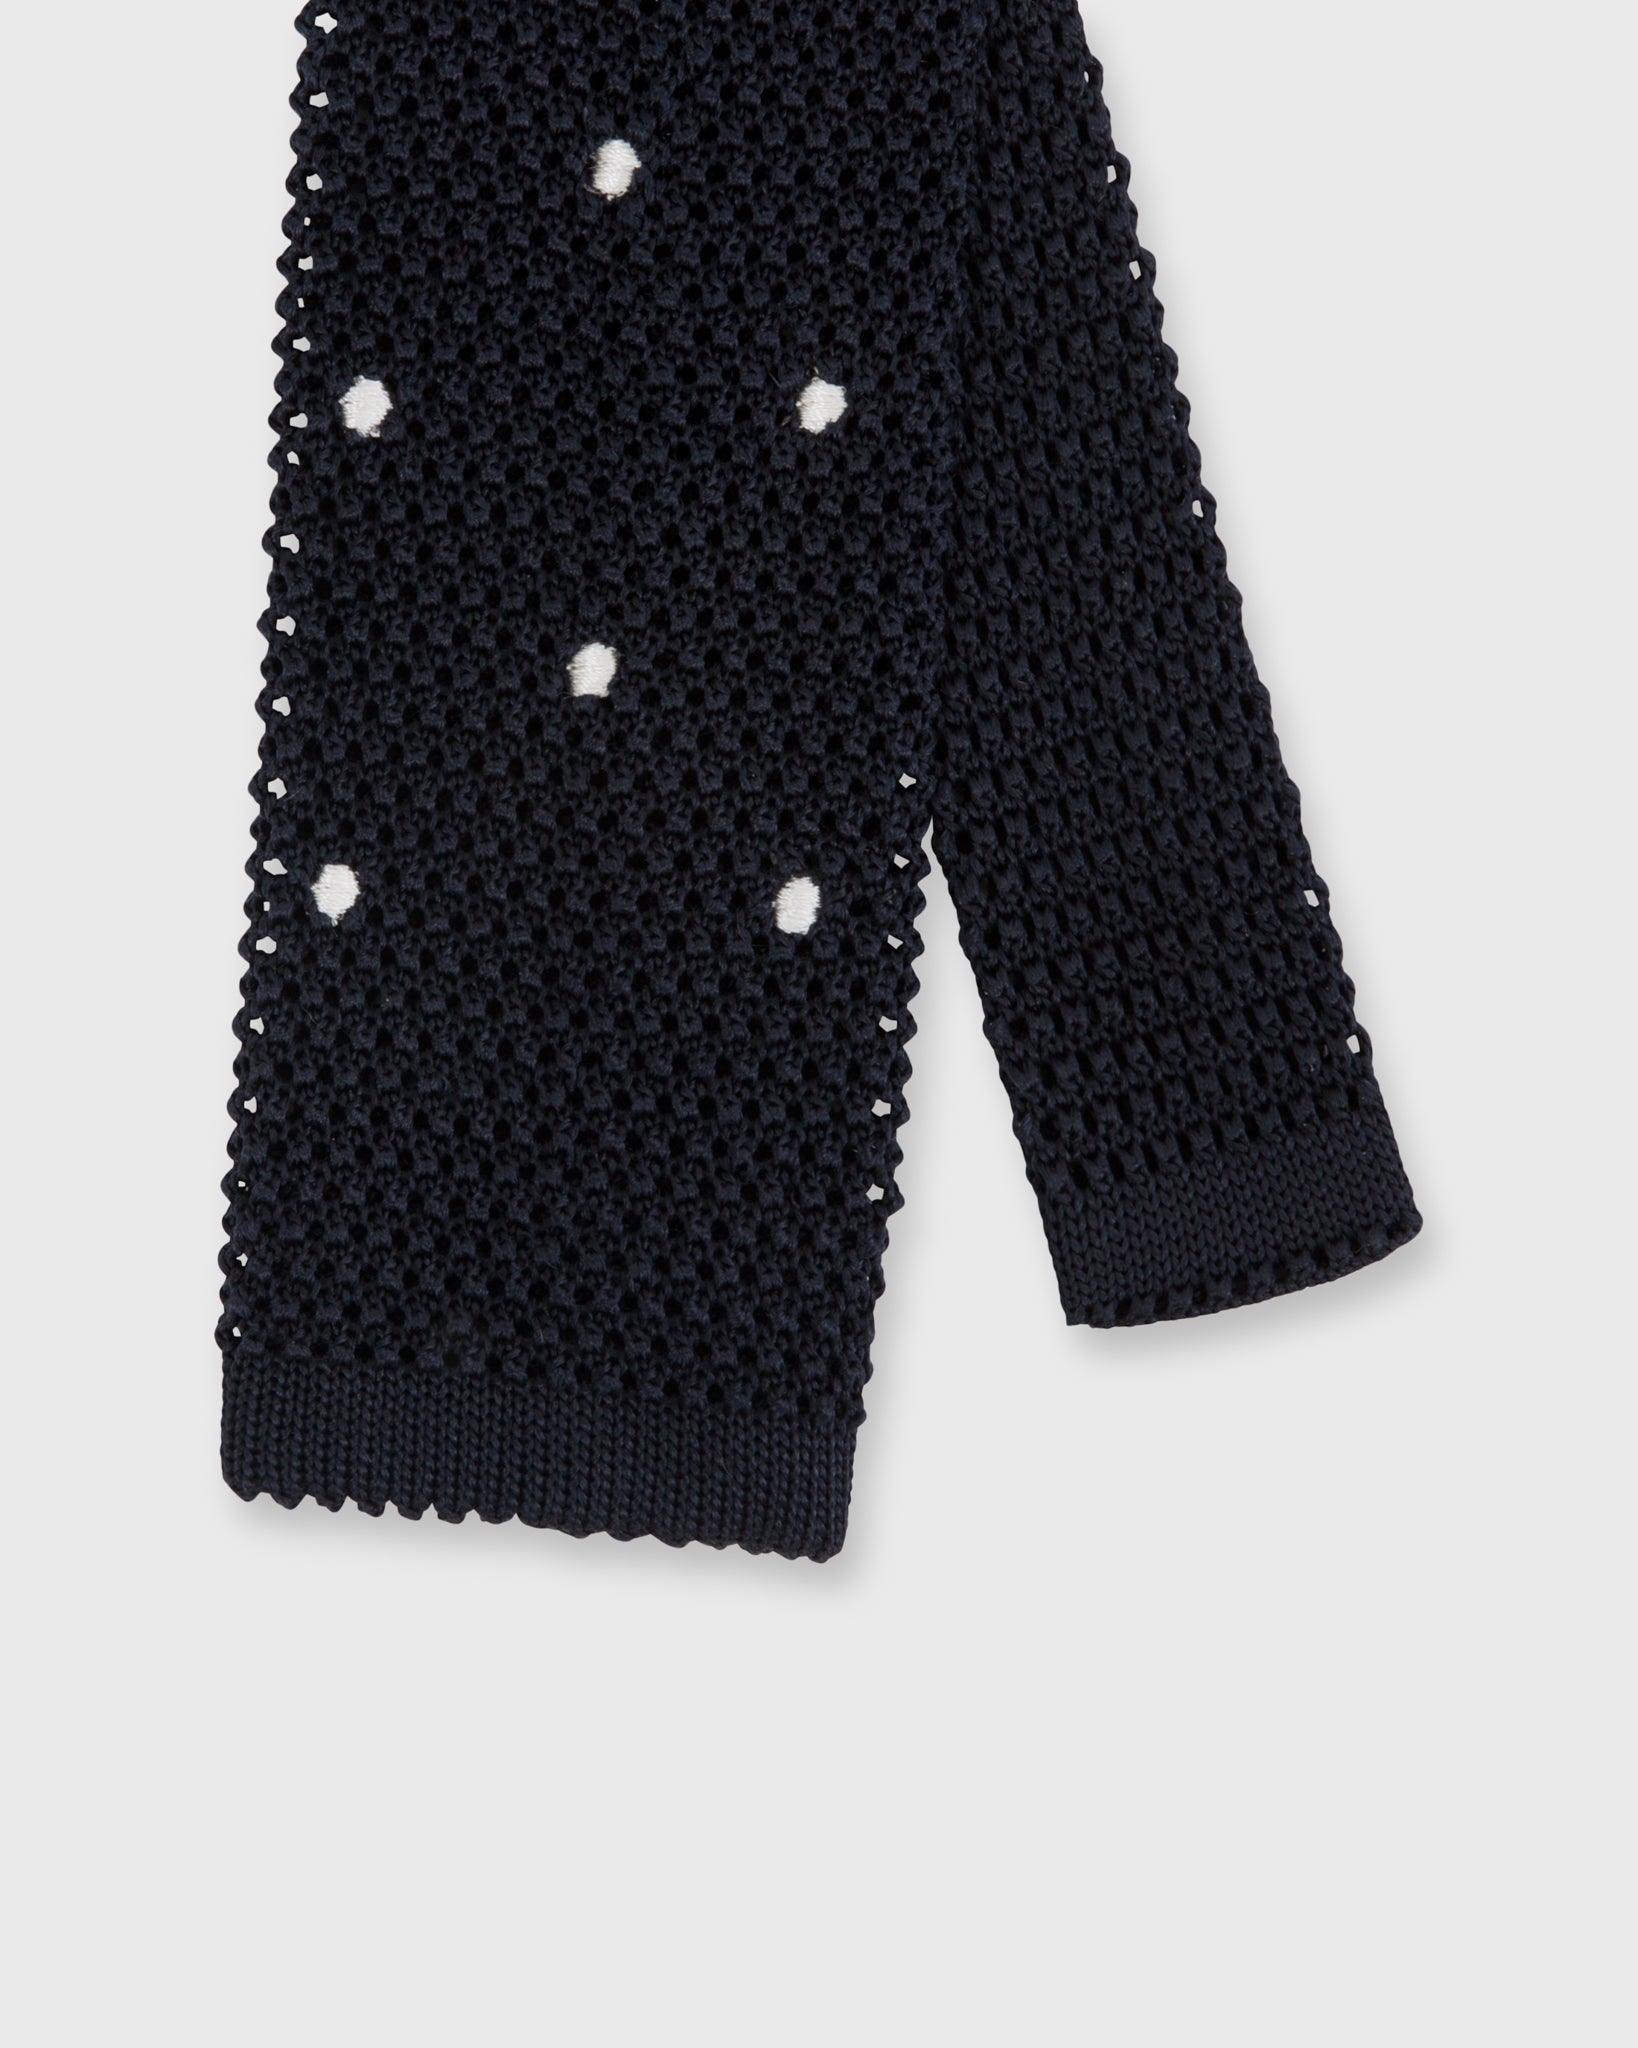 Silk Knit Tie Navy/White Dot